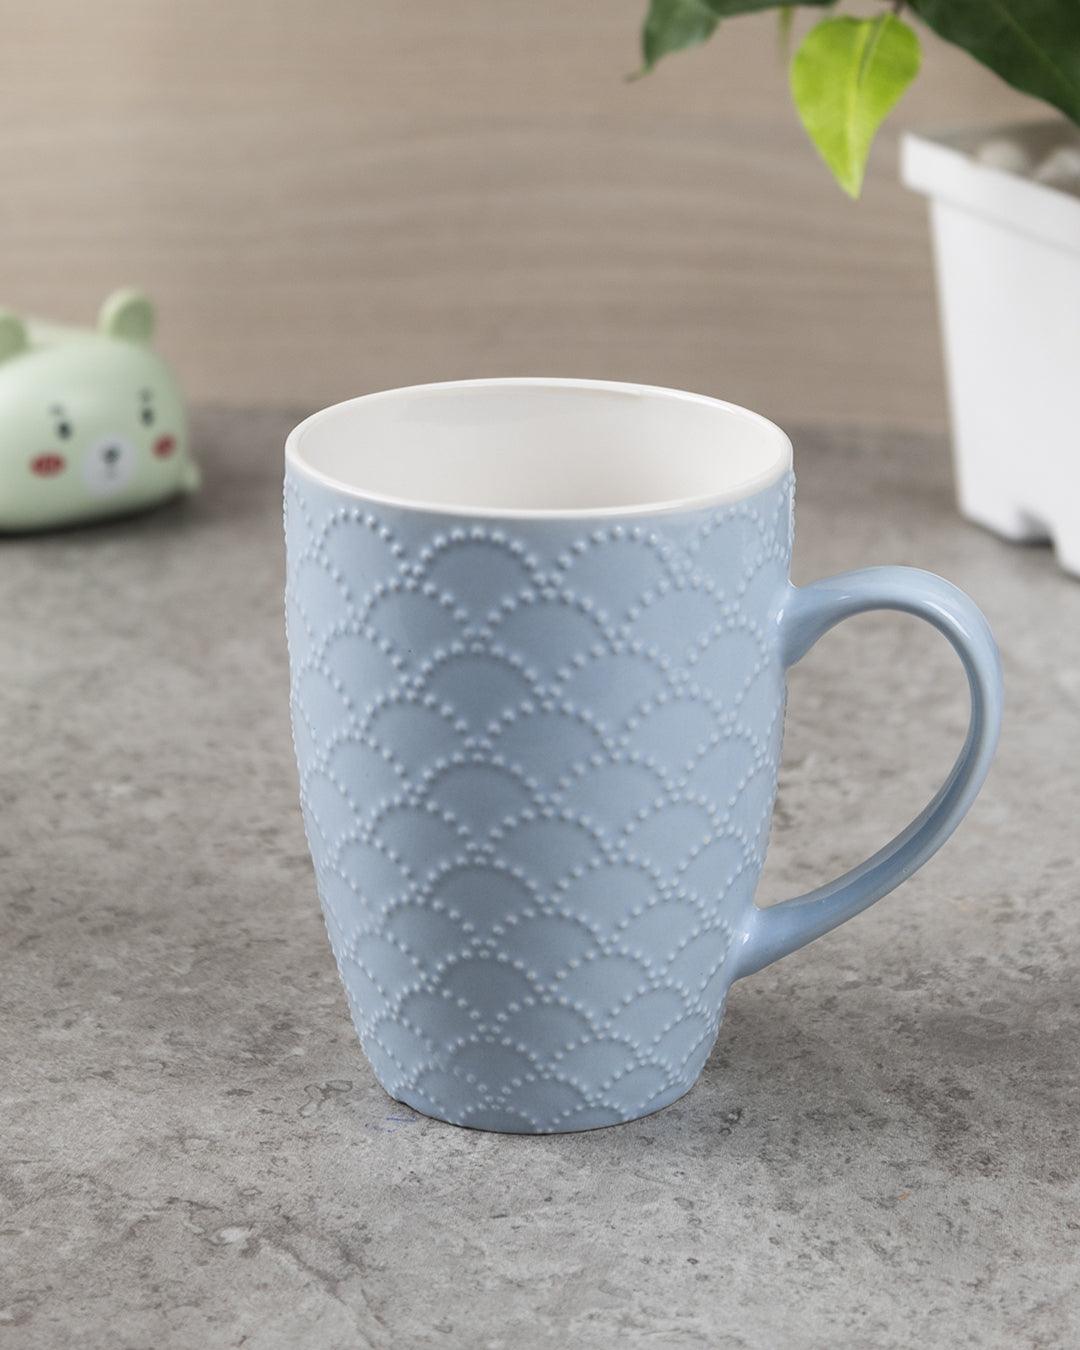 Ceramic Coffee Mug 330 mL (Light Blue & Blue) - MARKET 99